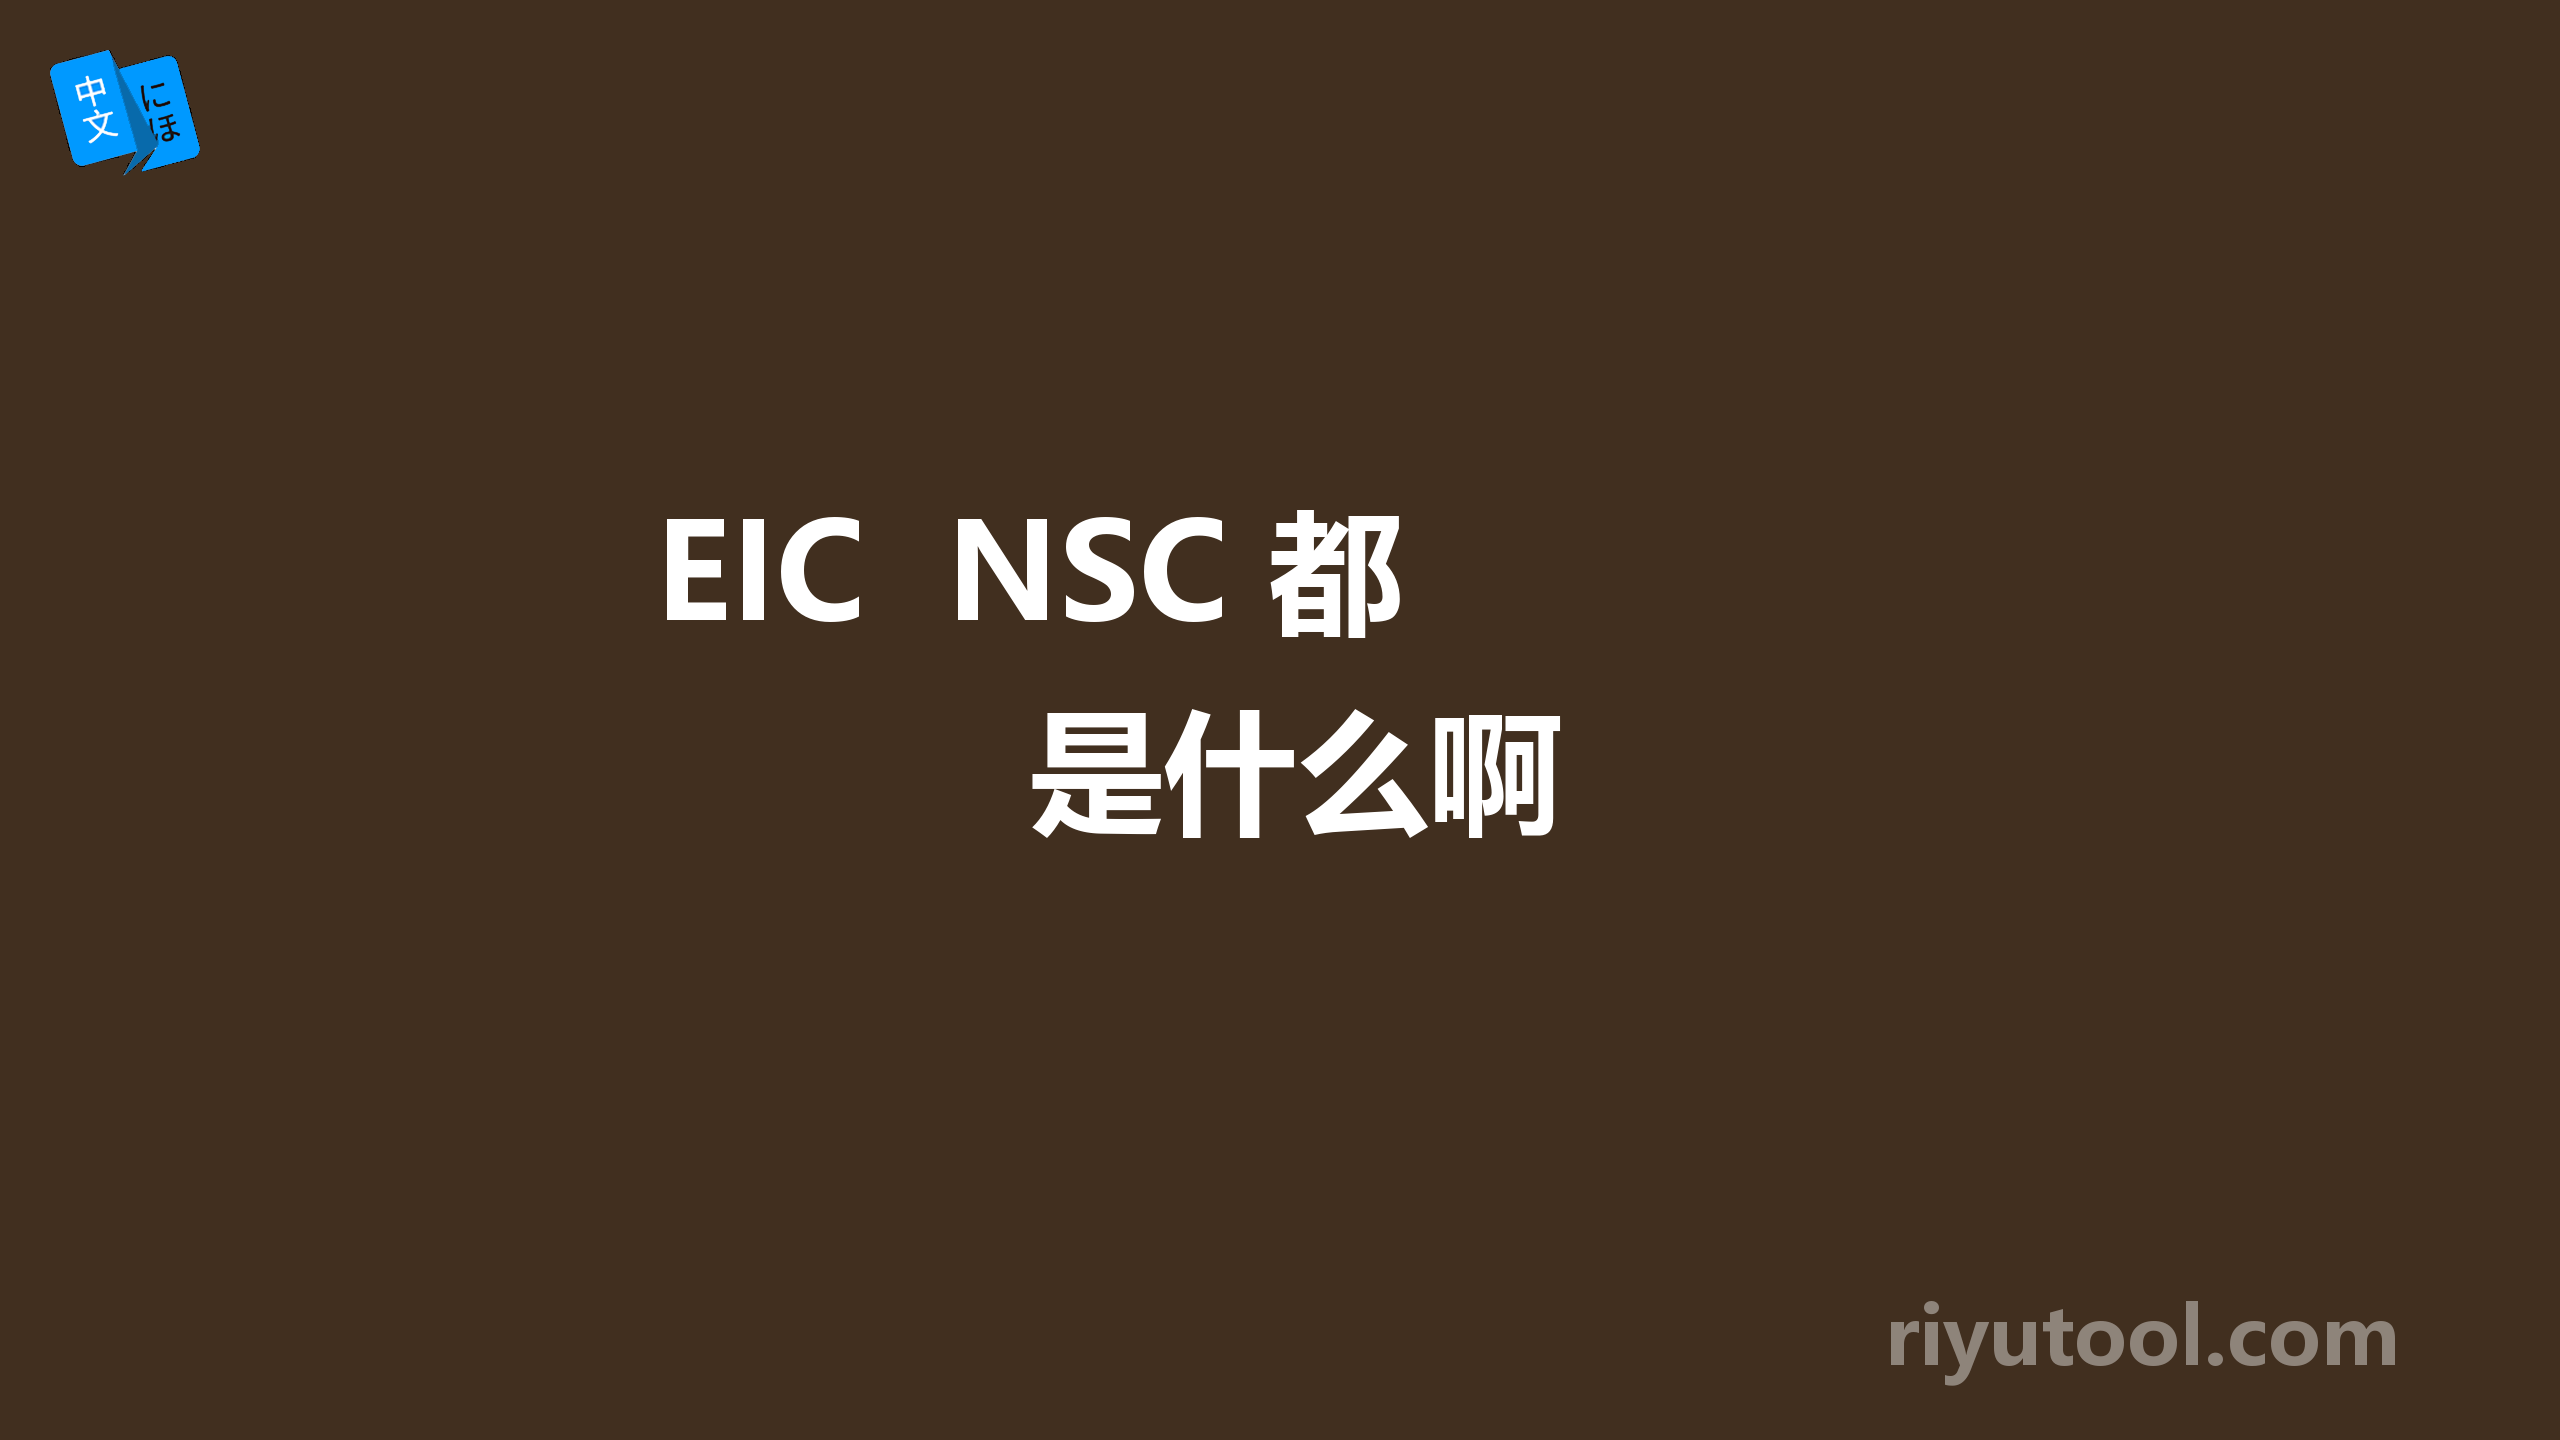 EIC  NSC 都是什么啊